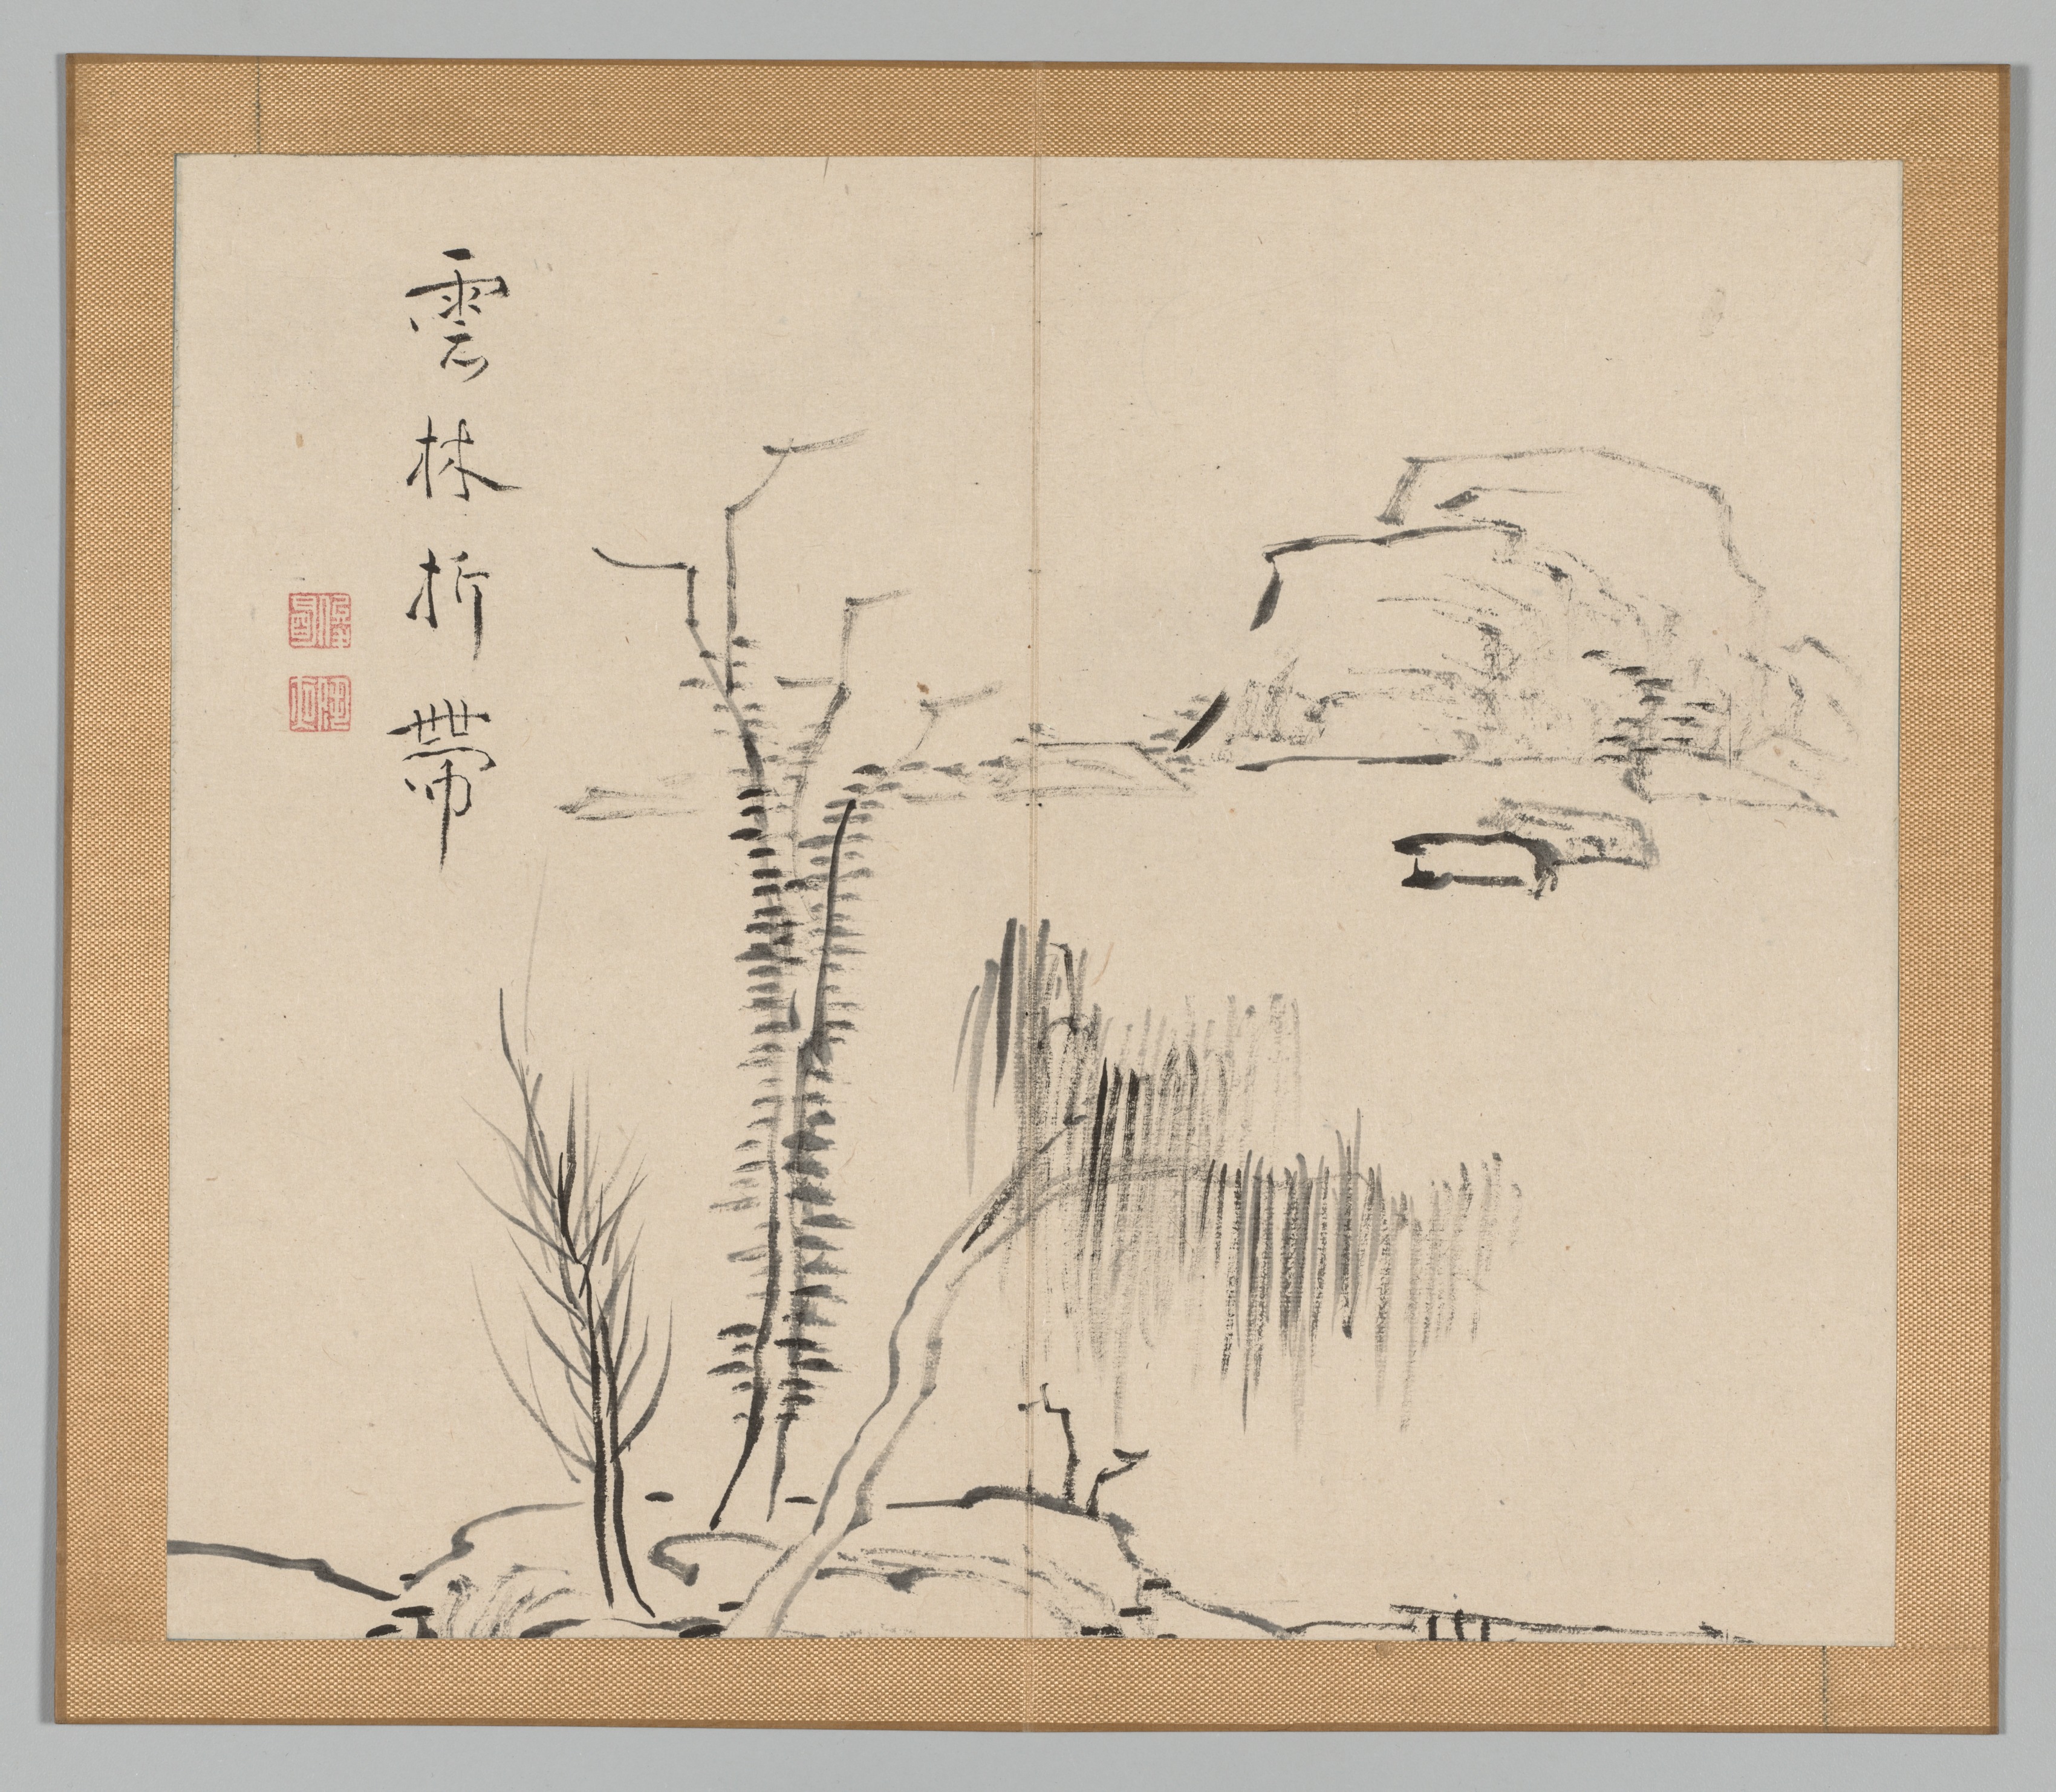 Reverberations of Taiga, Volume 2 (leaf 16)